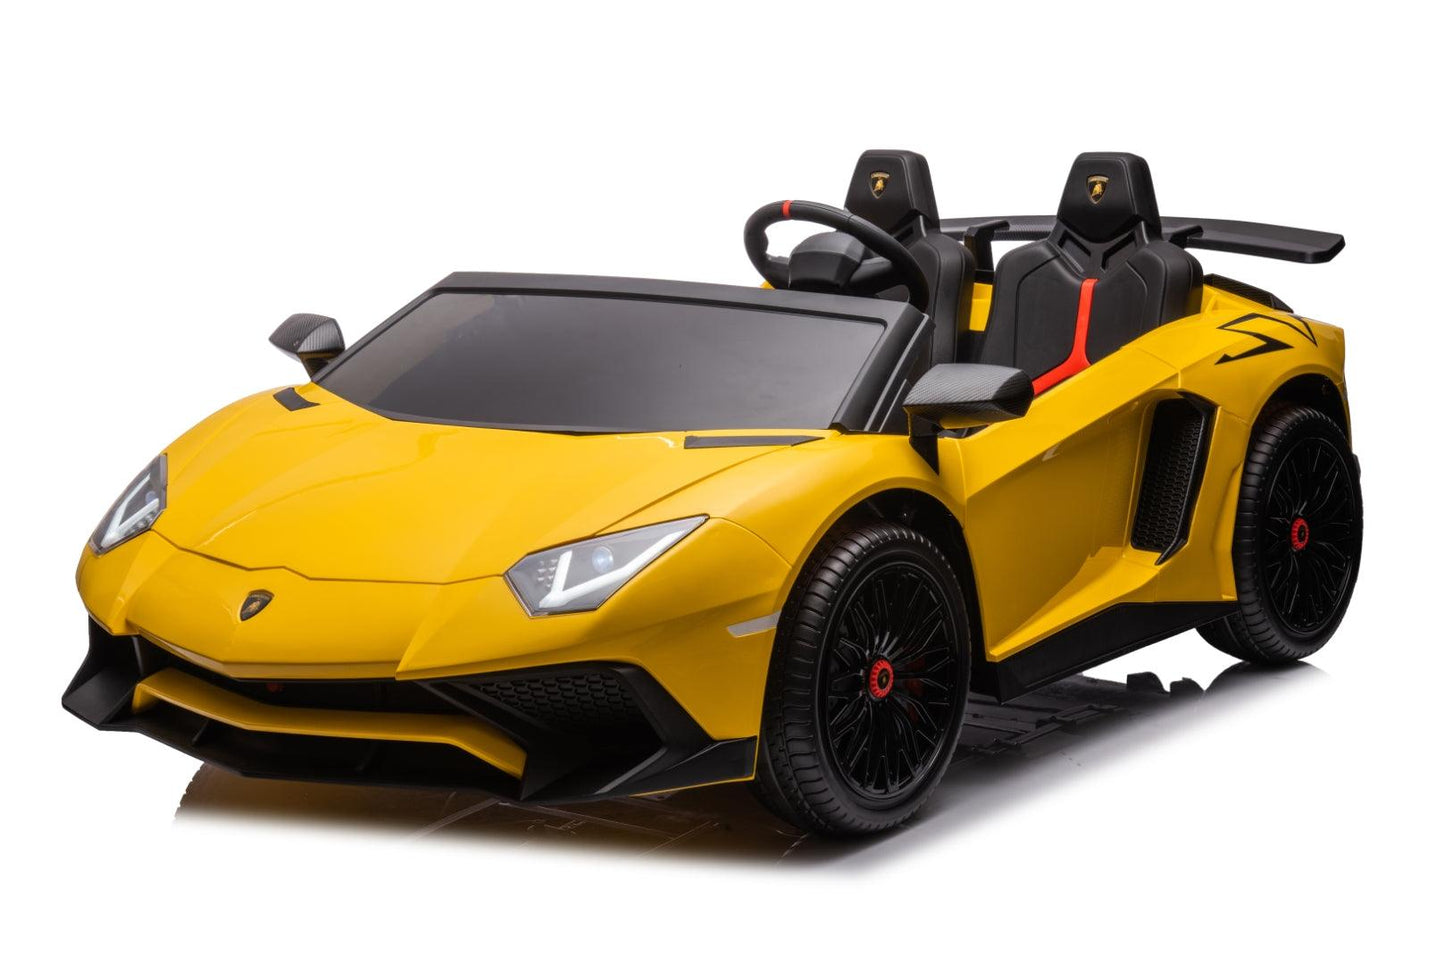 24V Lamborghini Aventador 2 Seater Ride On Car for Kids: Advanced Brushless Motor & Differential for High-Octane Fun-23